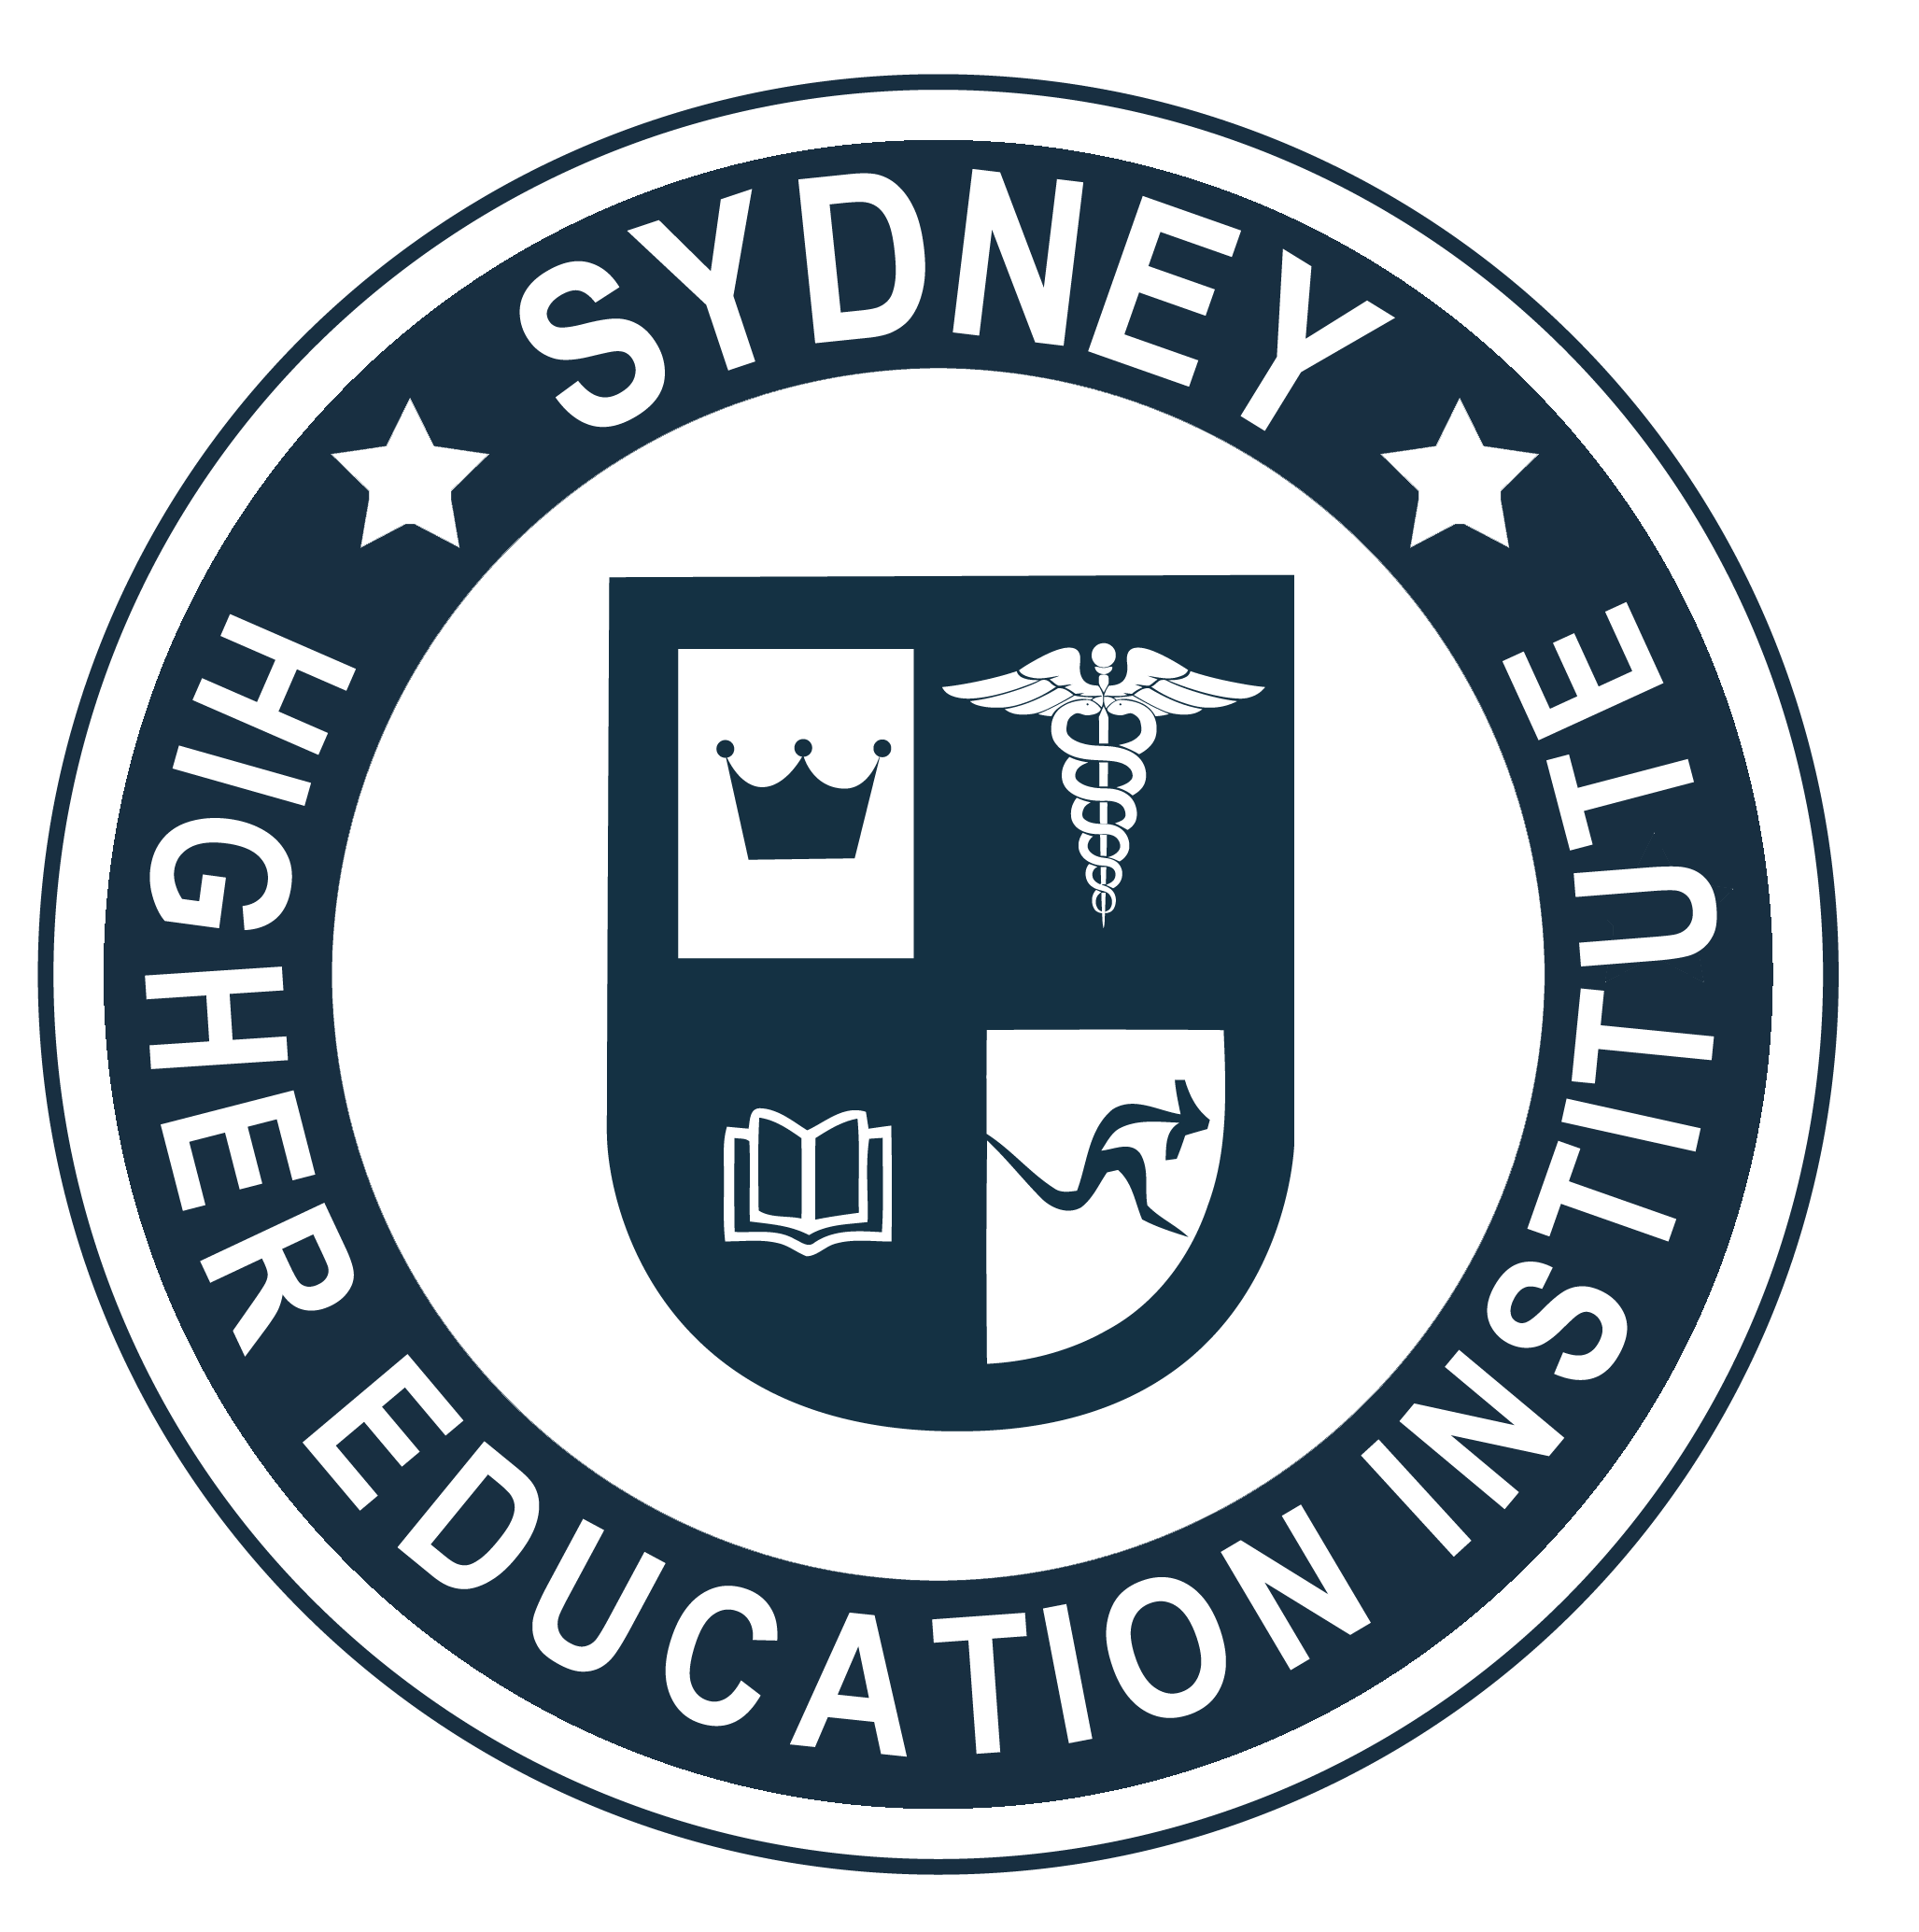 Cert IV TESOL Online Course | Sydney Higher Education Institute